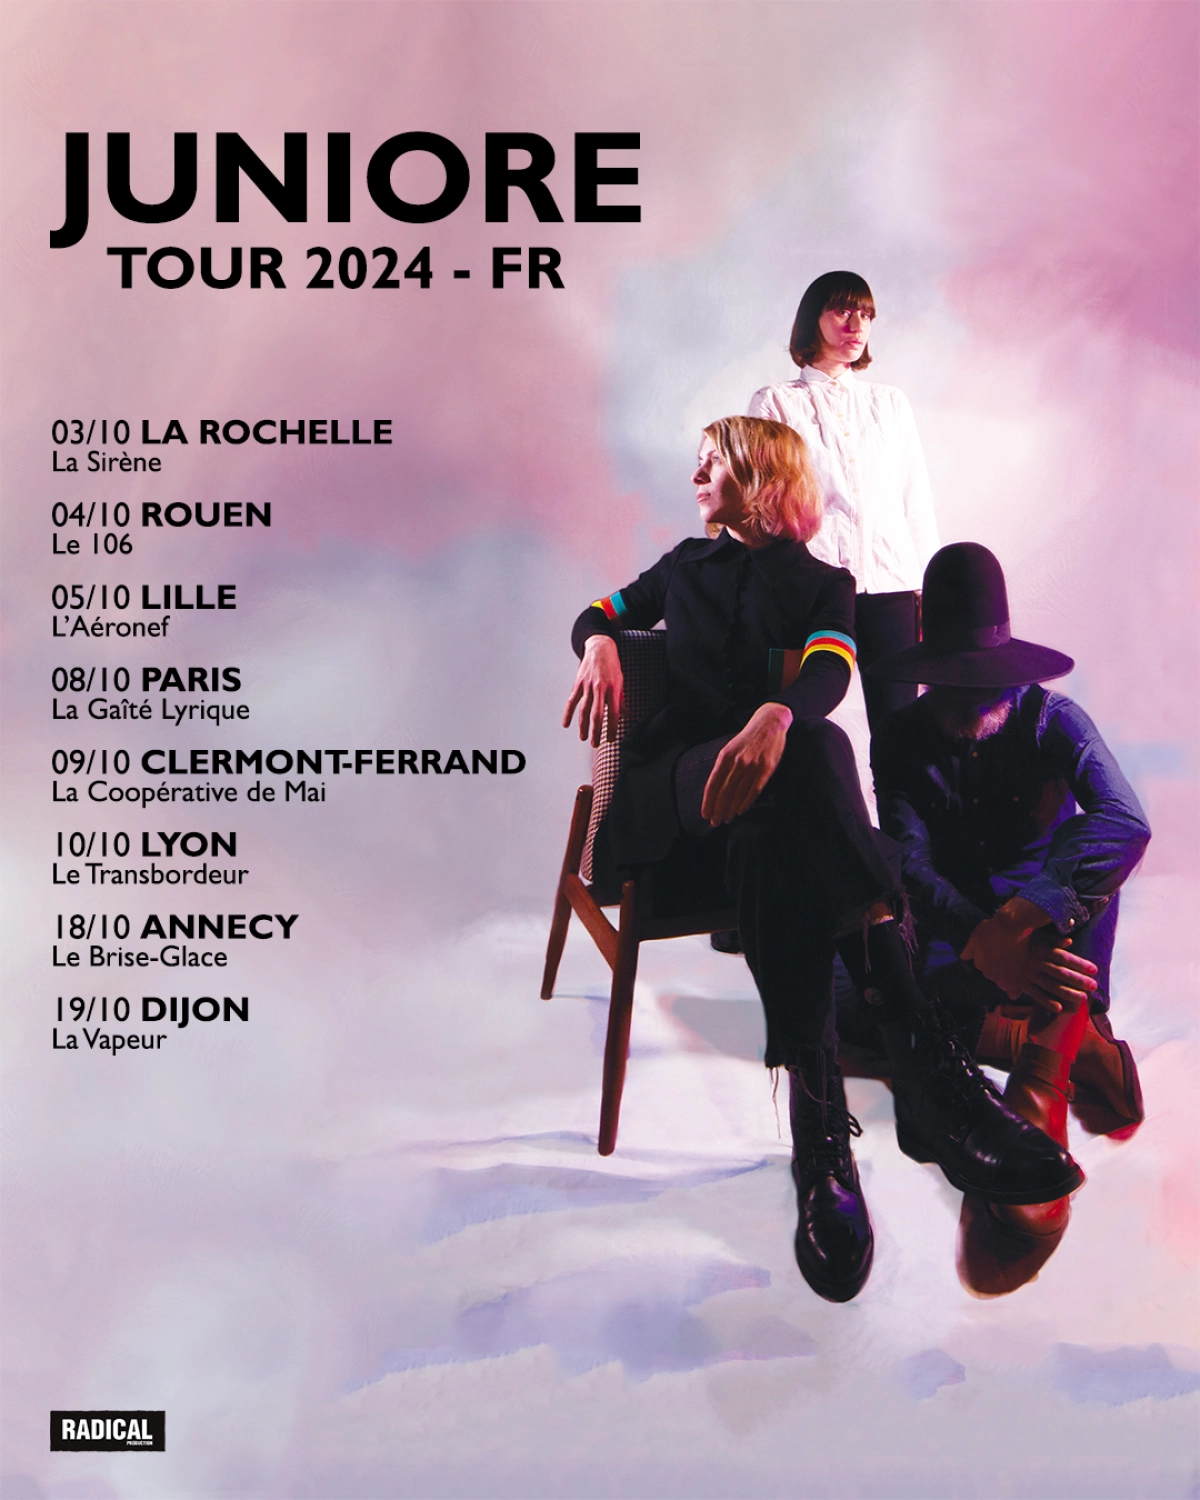 Juniore at Le Transbordeur Tickets